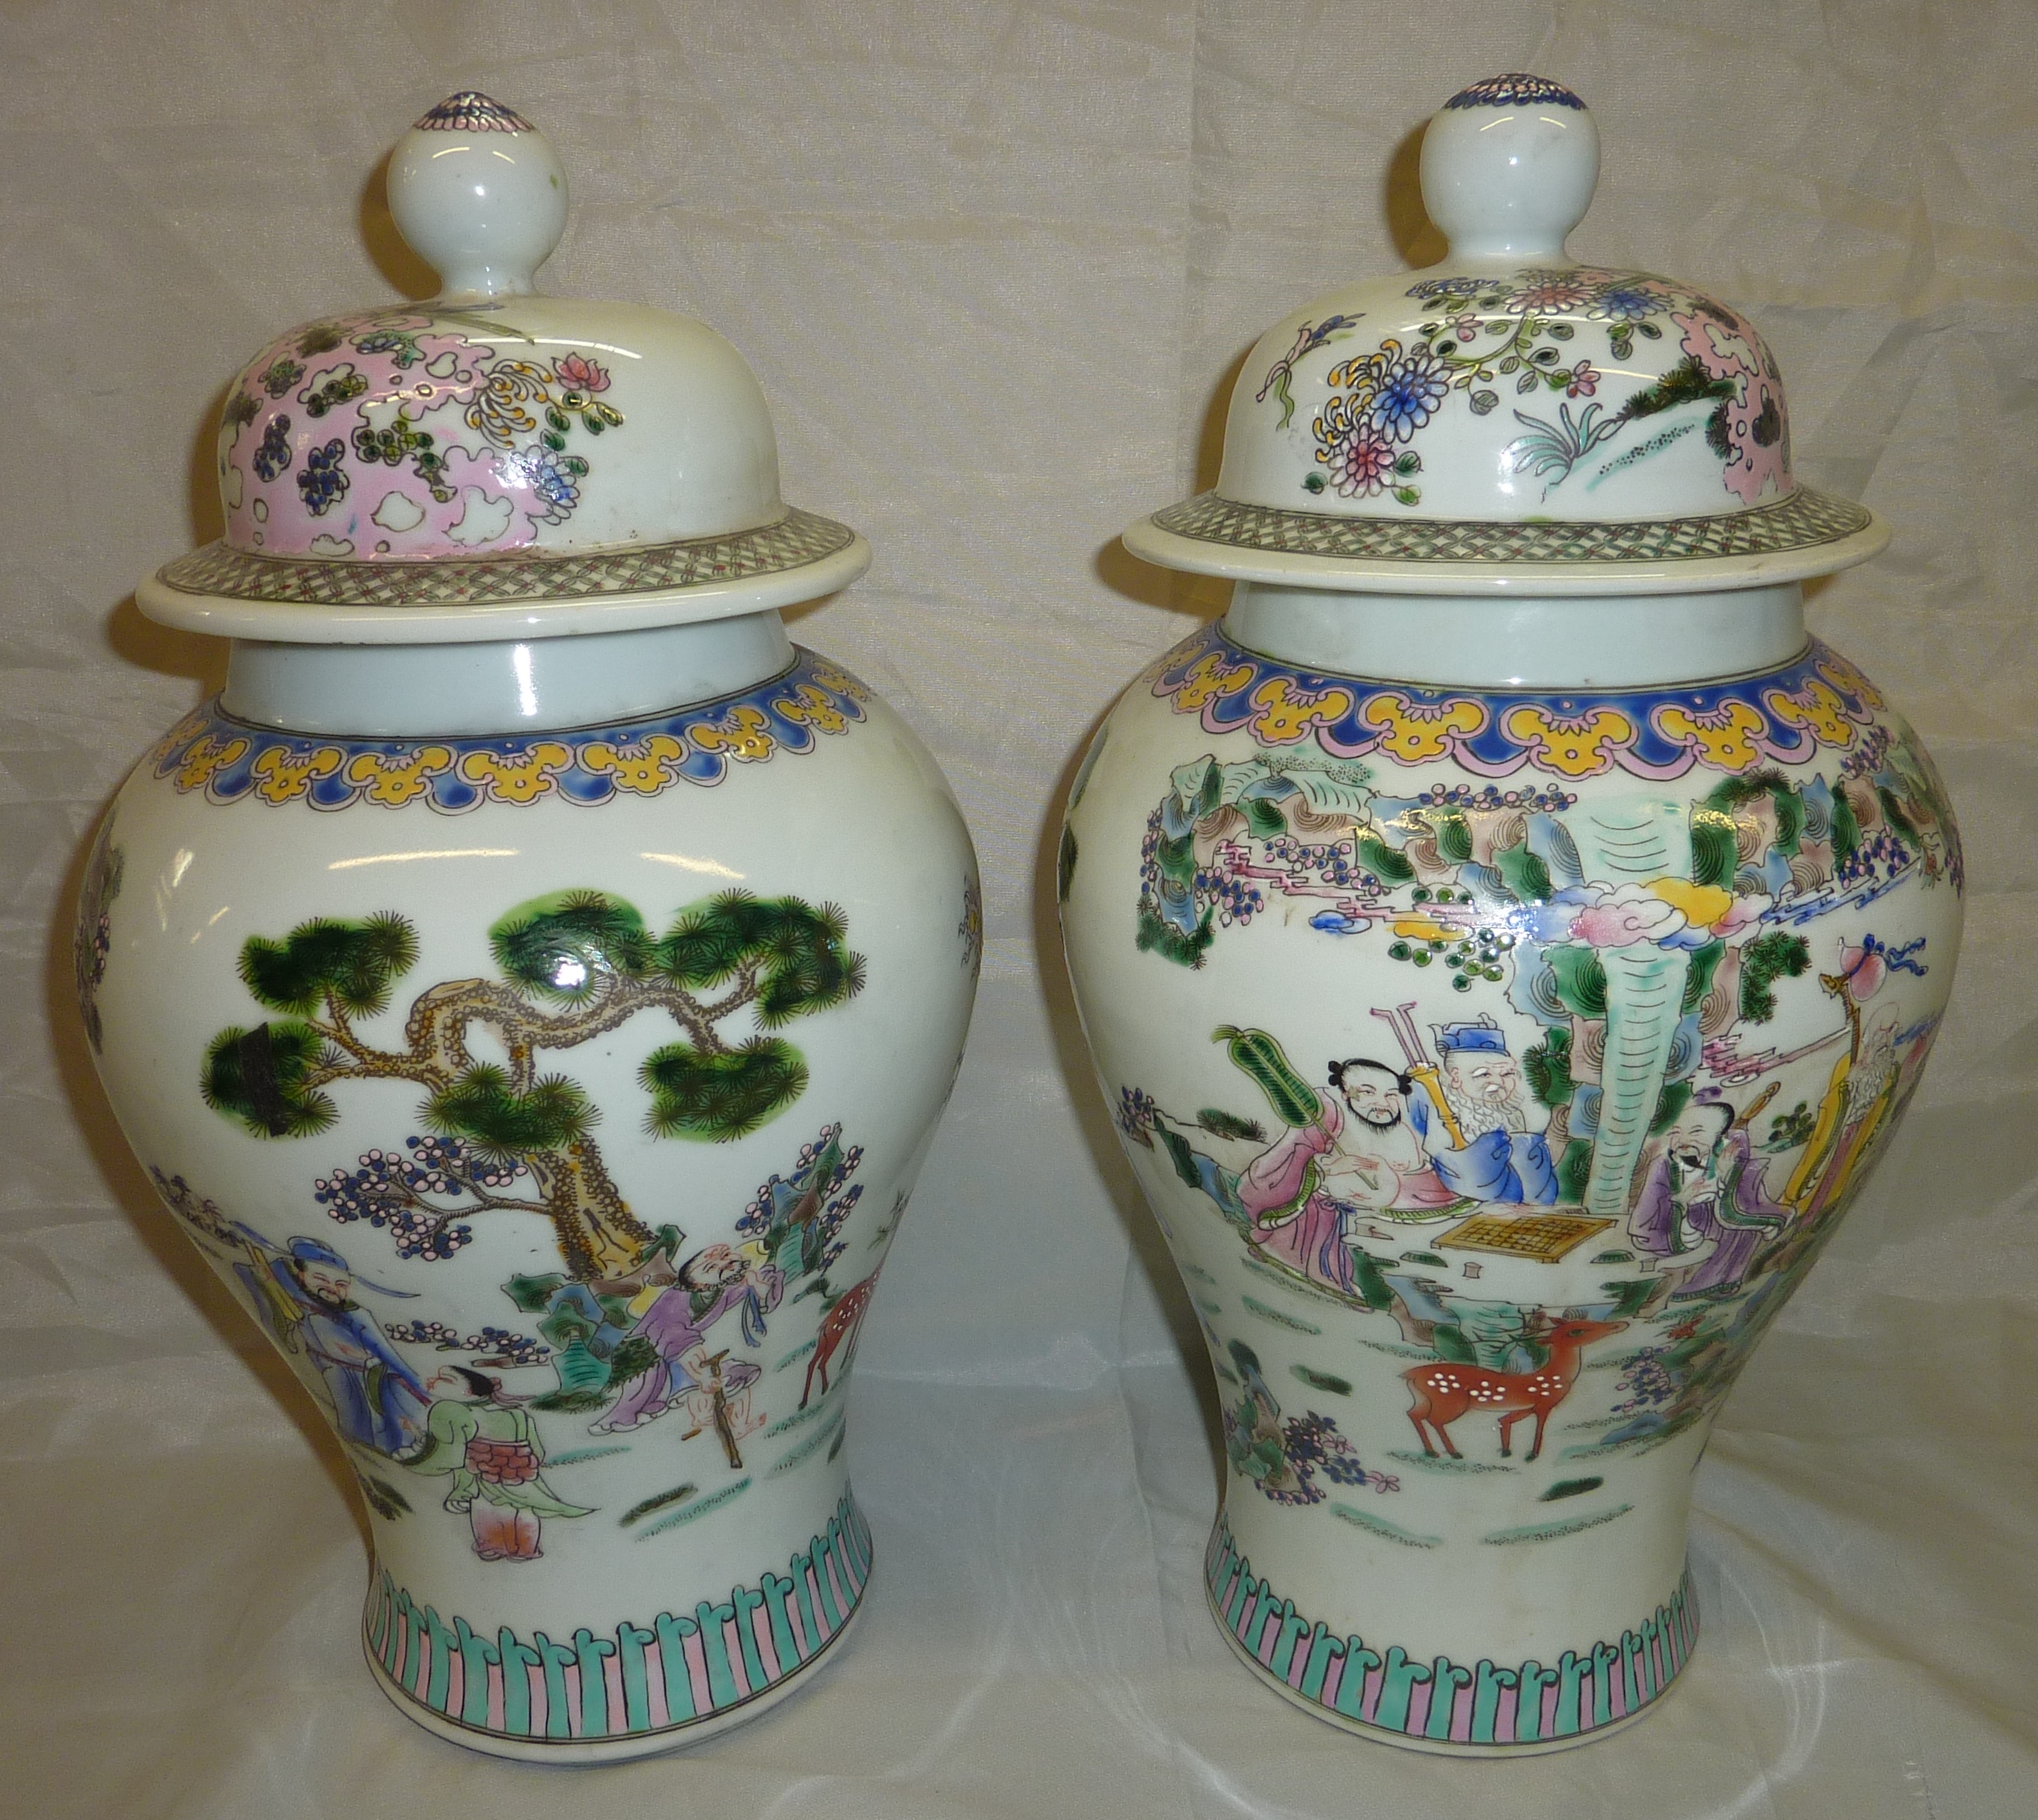 Pair of Oriental vases depicting various scenes including warriors on horseback with six digit